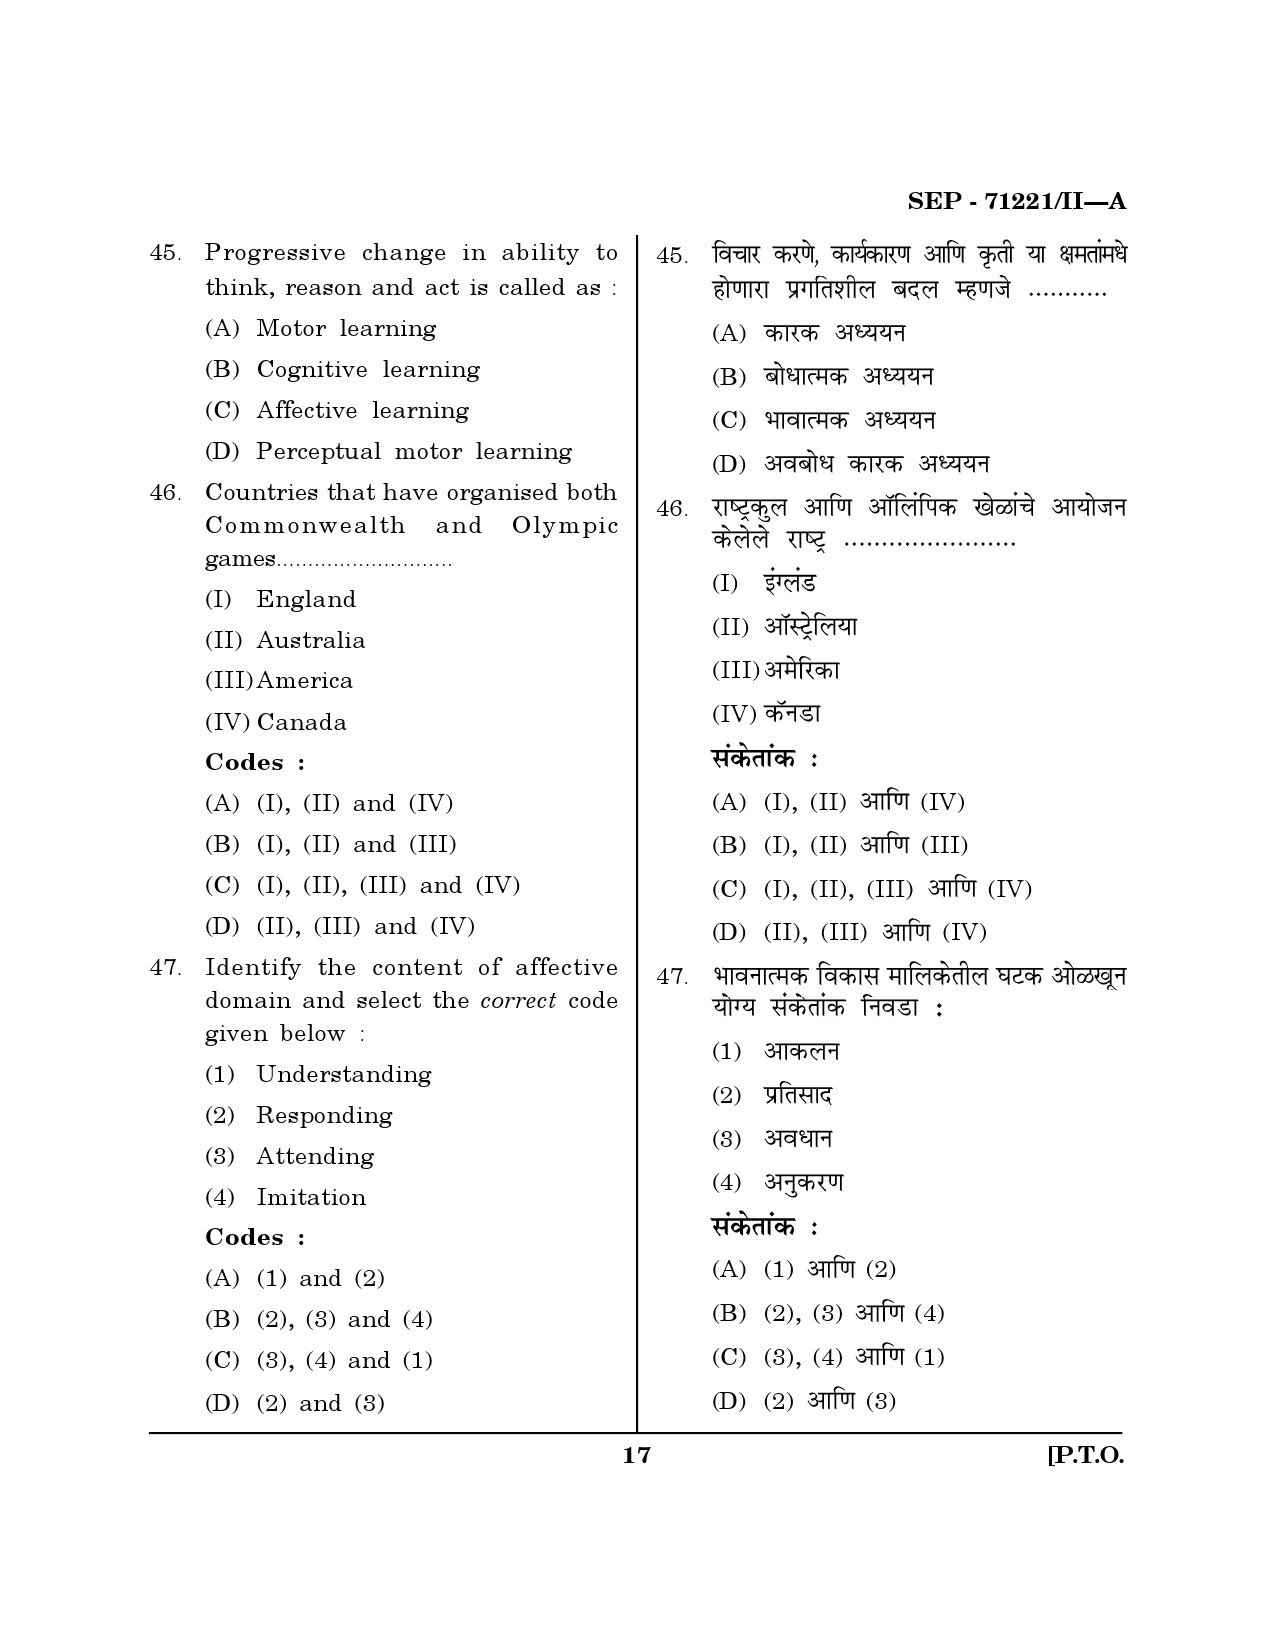 Maharashtra SET Physical Education Exam Question Paper September 2021 16